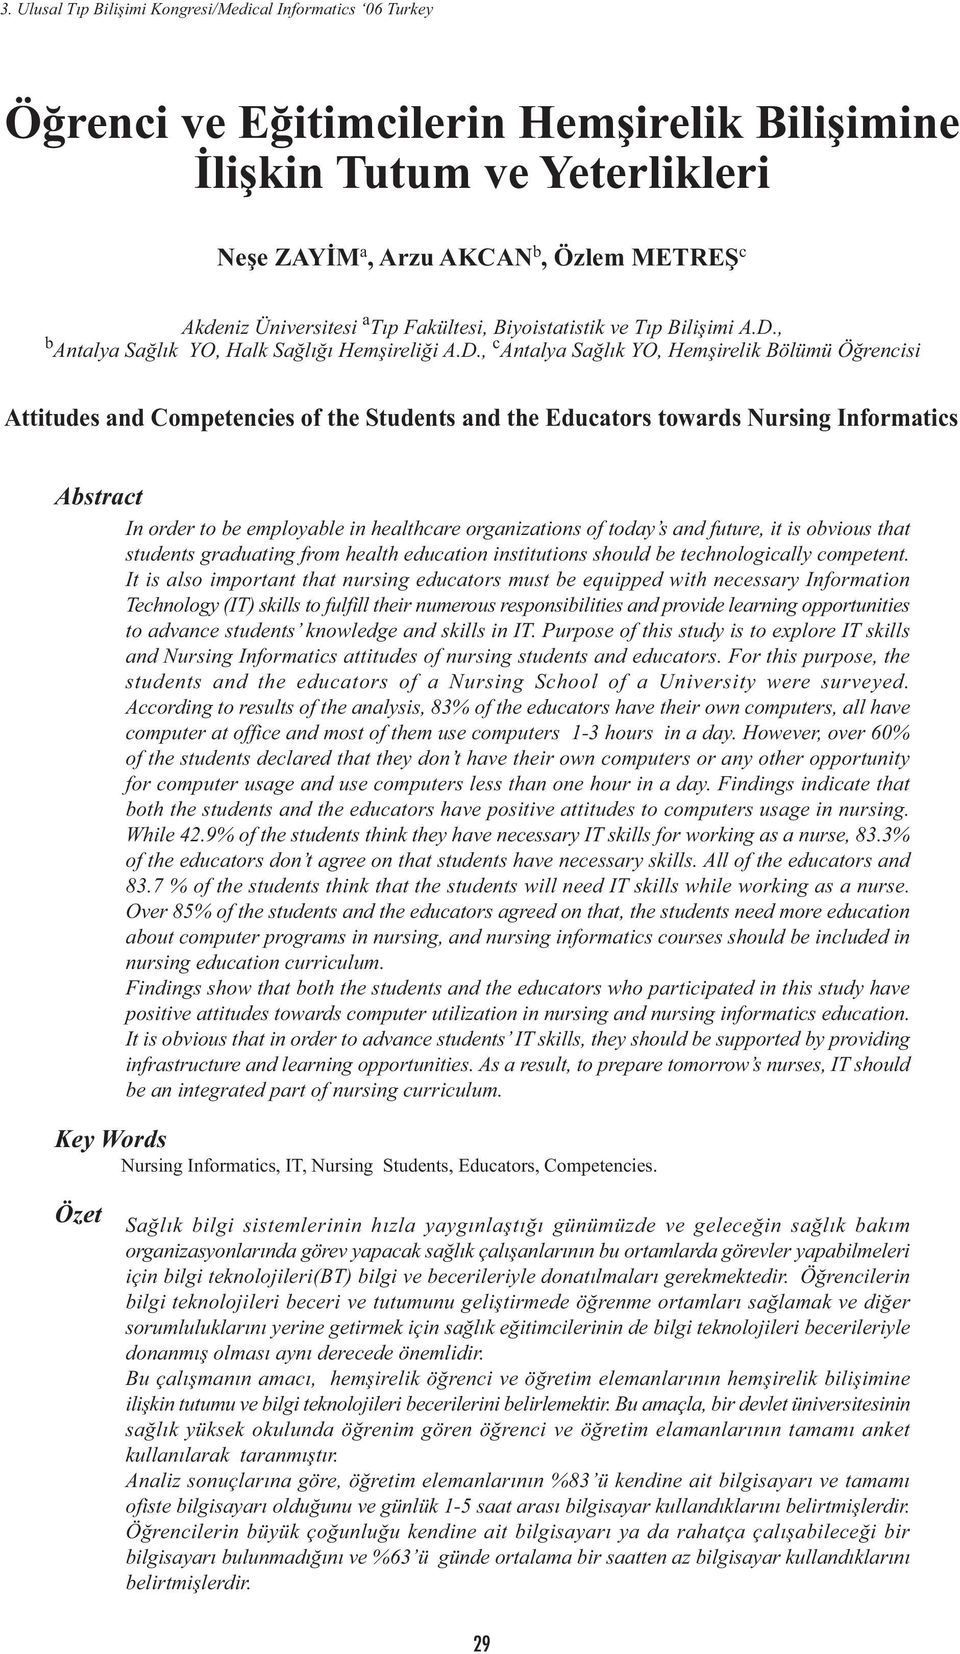 , c Antalya Saðlýk YO, Hemþirelik Bölümü si Attitudes and Competencies of the Students and the Educators towards Nursing Informatics Abstract In order to be employable in healthcare organizations of